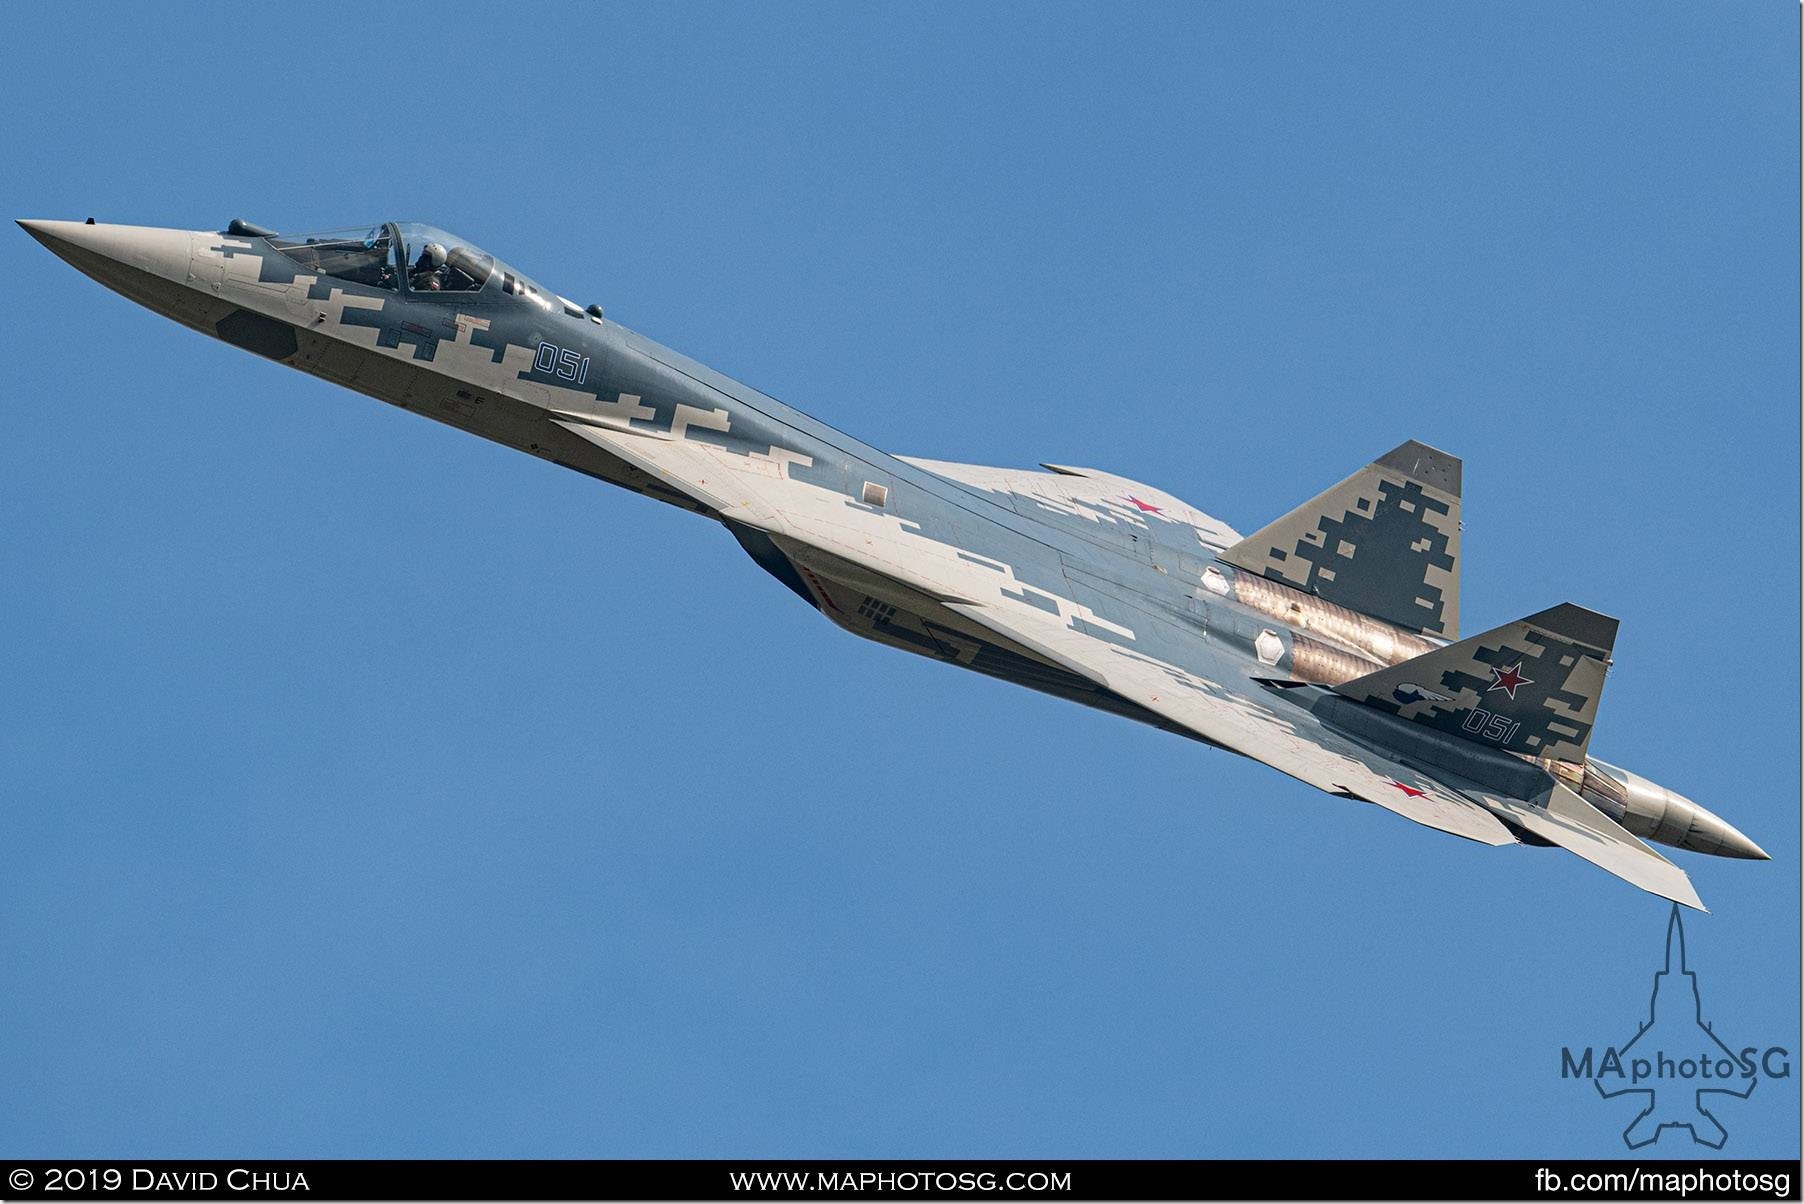 Sukhoi Su-57 fifth generation fighter aircraft